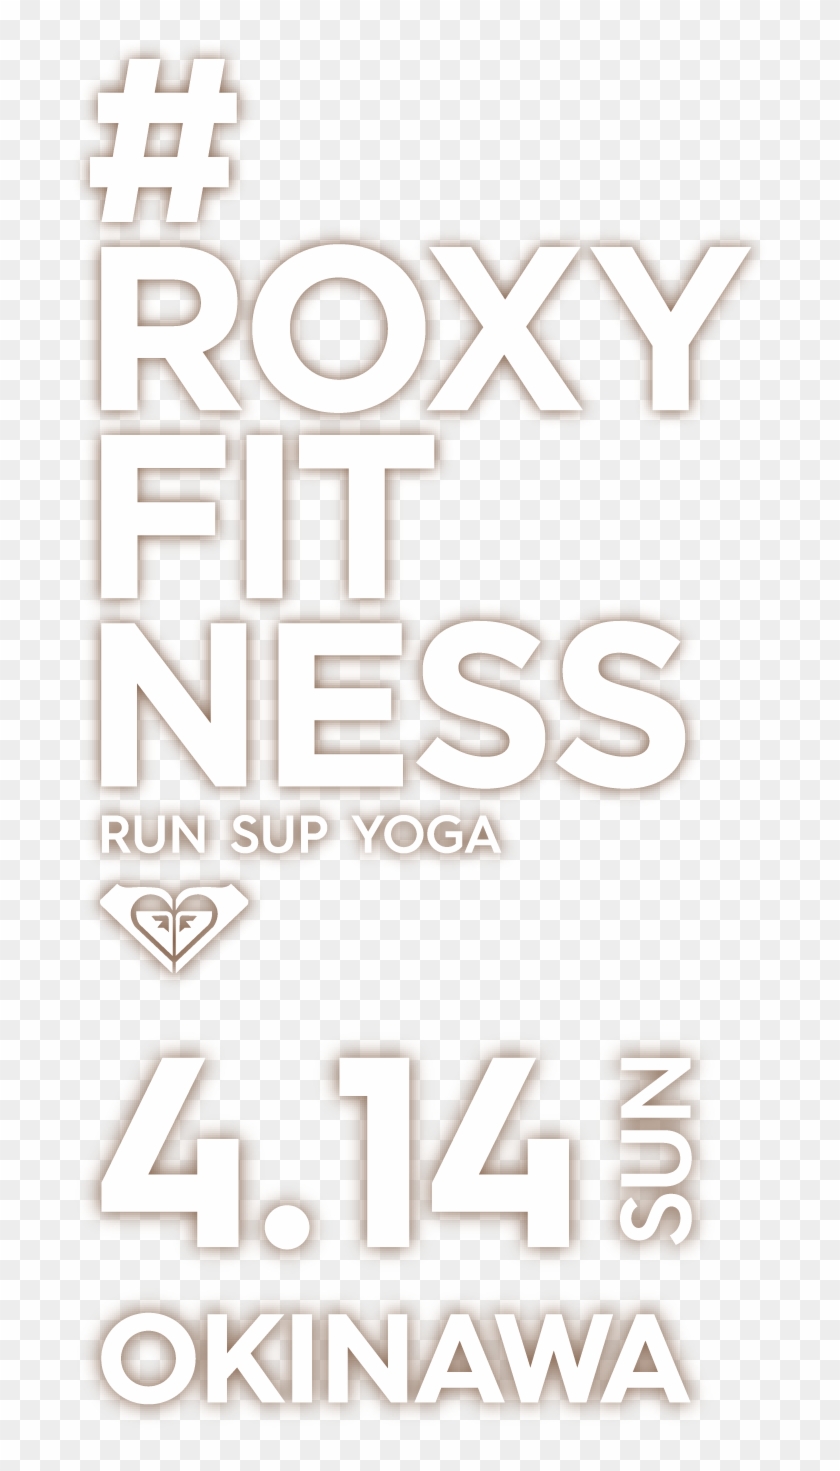 Roxy Fit Ness Run Sup Yoga Okinawa - Poster Clipart #4819867